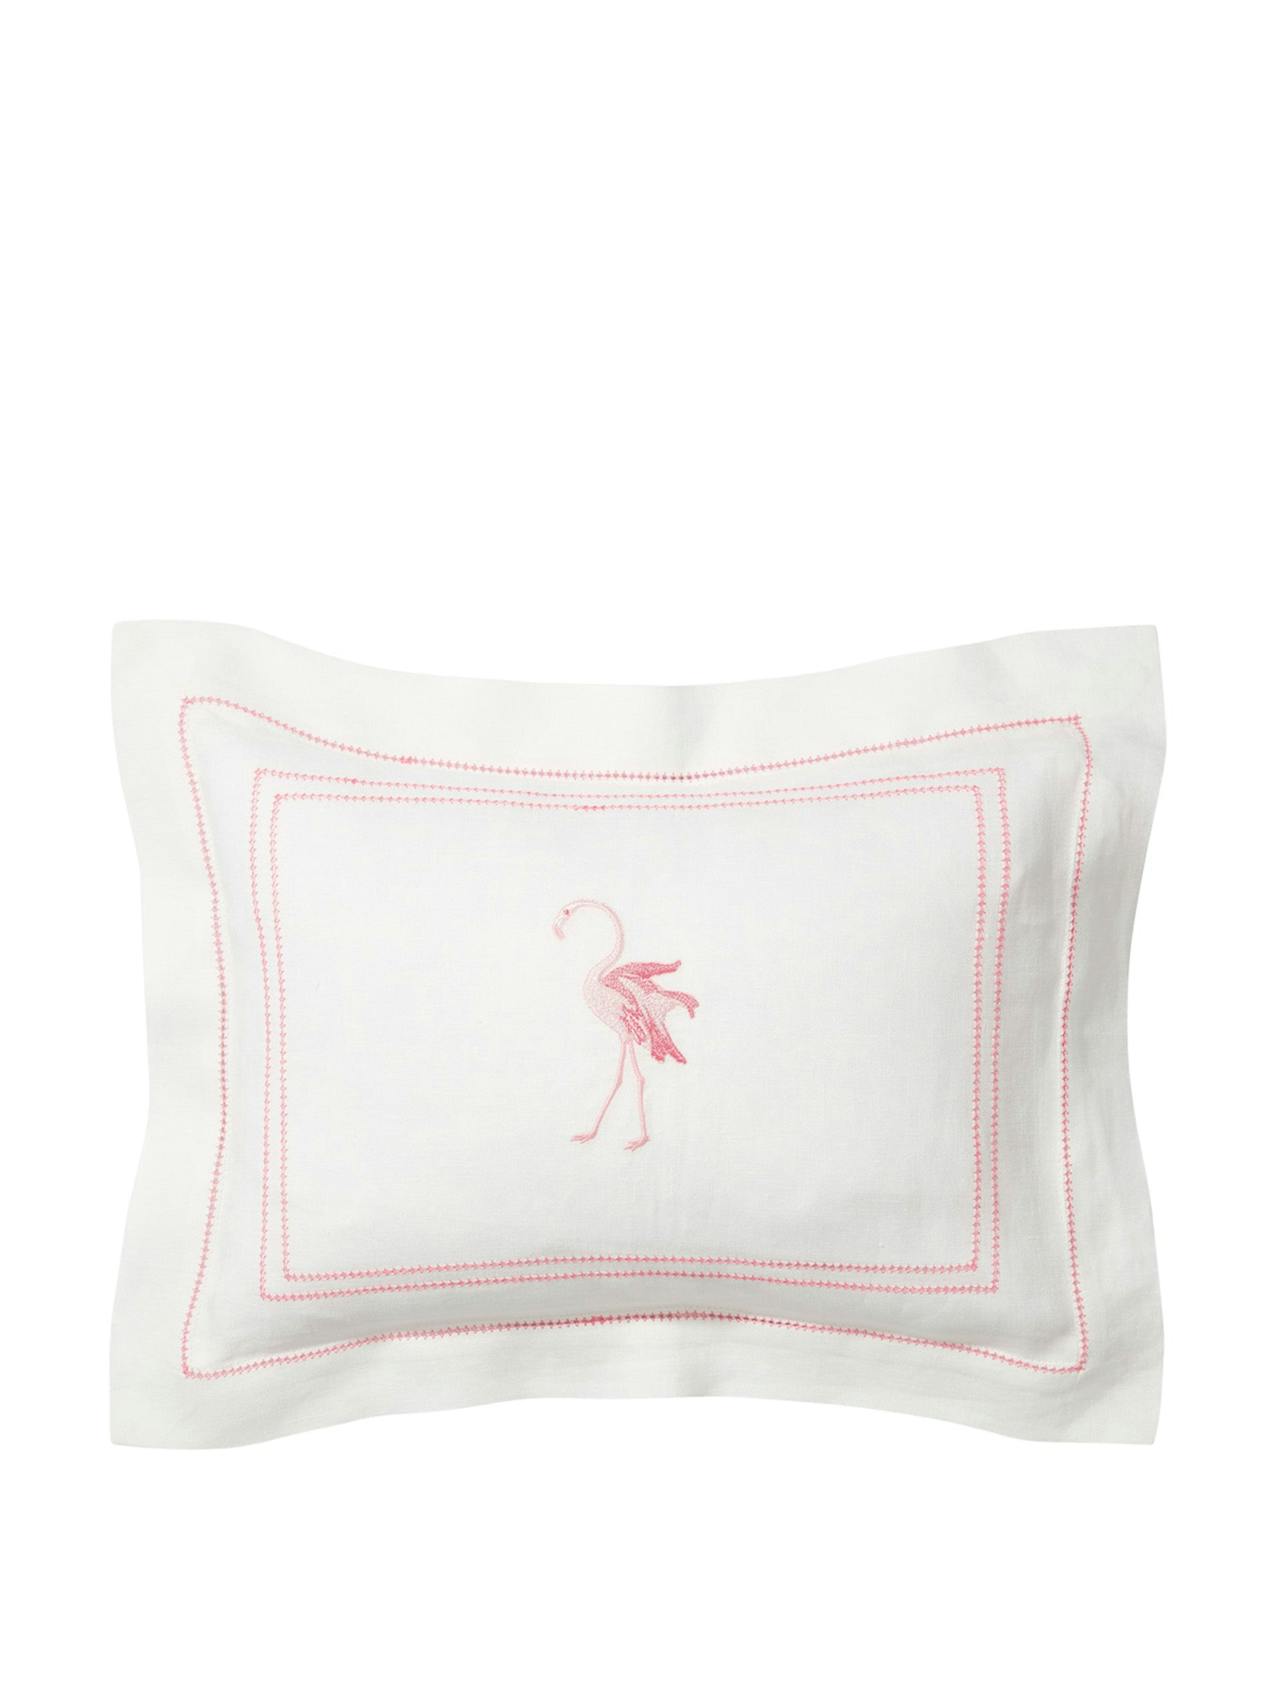 Small pink hemstitch flamingo pillow